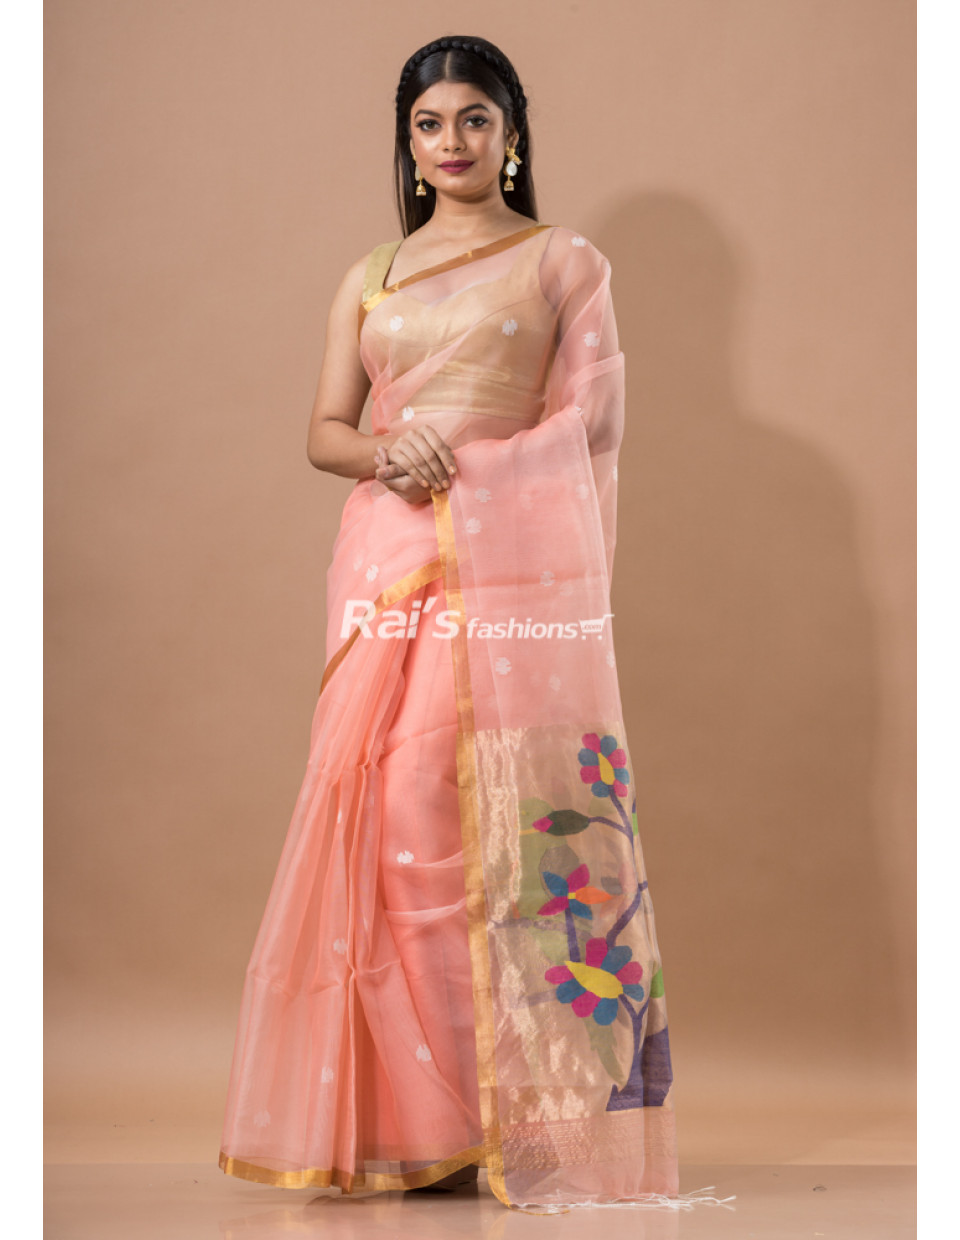 All Over Self Weaving Pure Reshom Silk Saree With Golden Zari Border (KR1688)